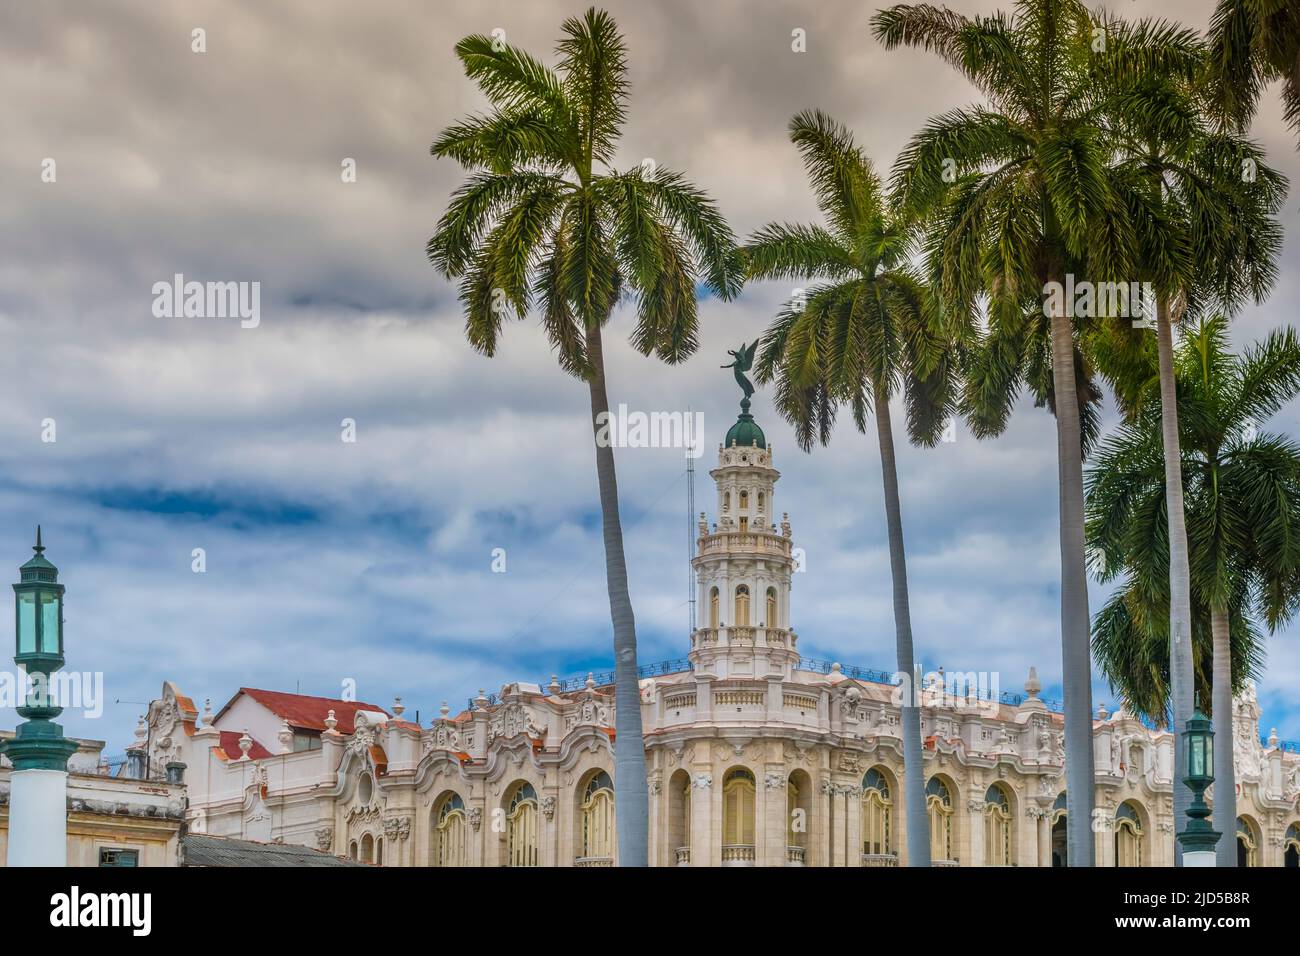 View of the stunning Gran Teatro de la Habana through palm trees in Old Havana, Cuba Stock Photo